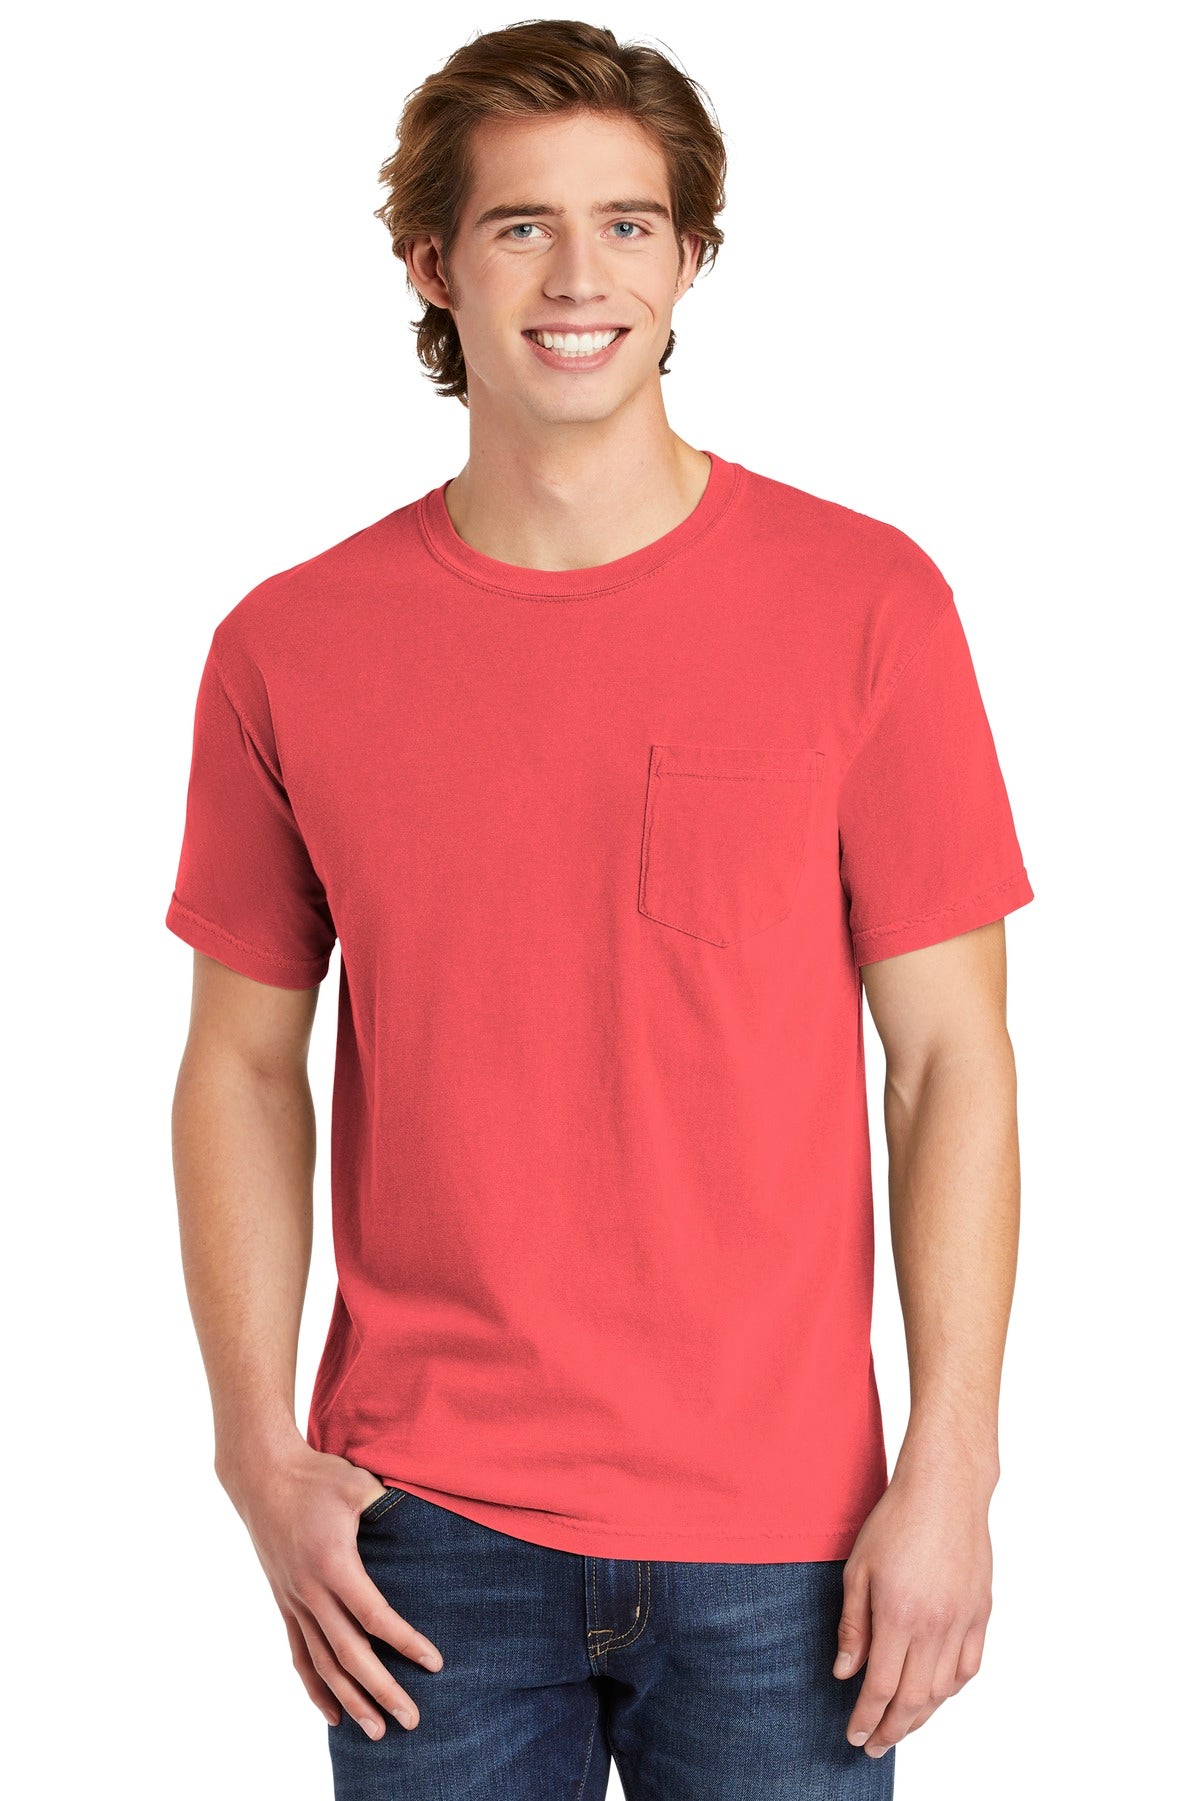 T-Shirts Watermelon Comfort Colors